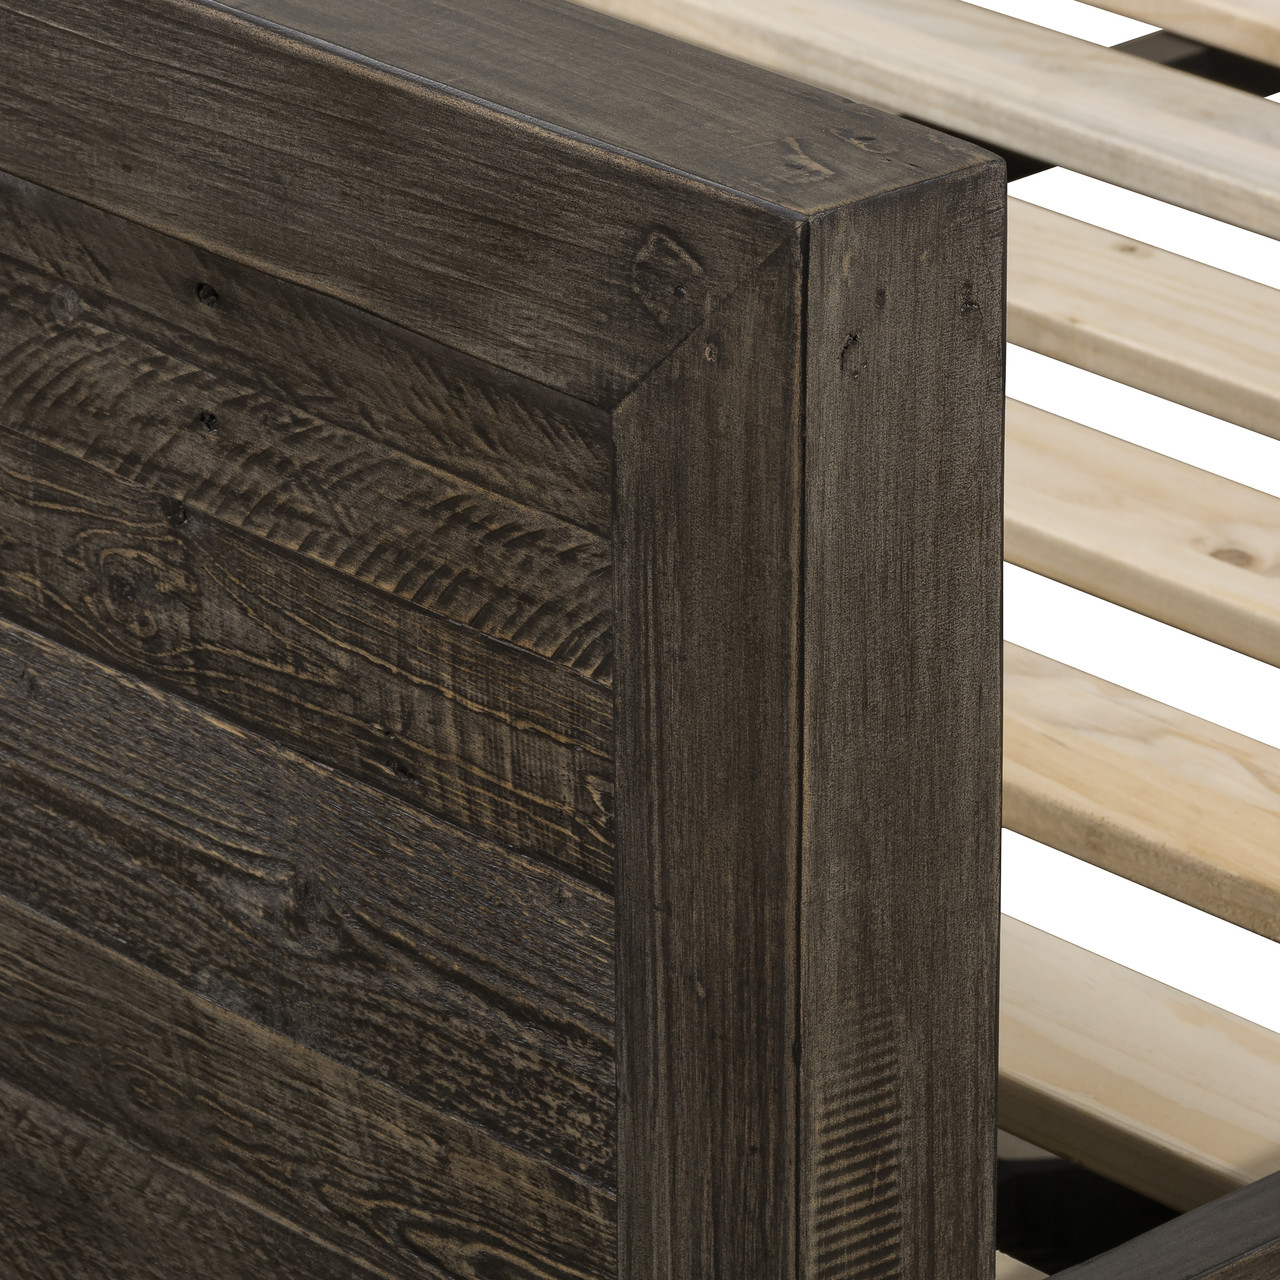 Caminito Grey Reclaimed Wood King Panel Bed Zin Home